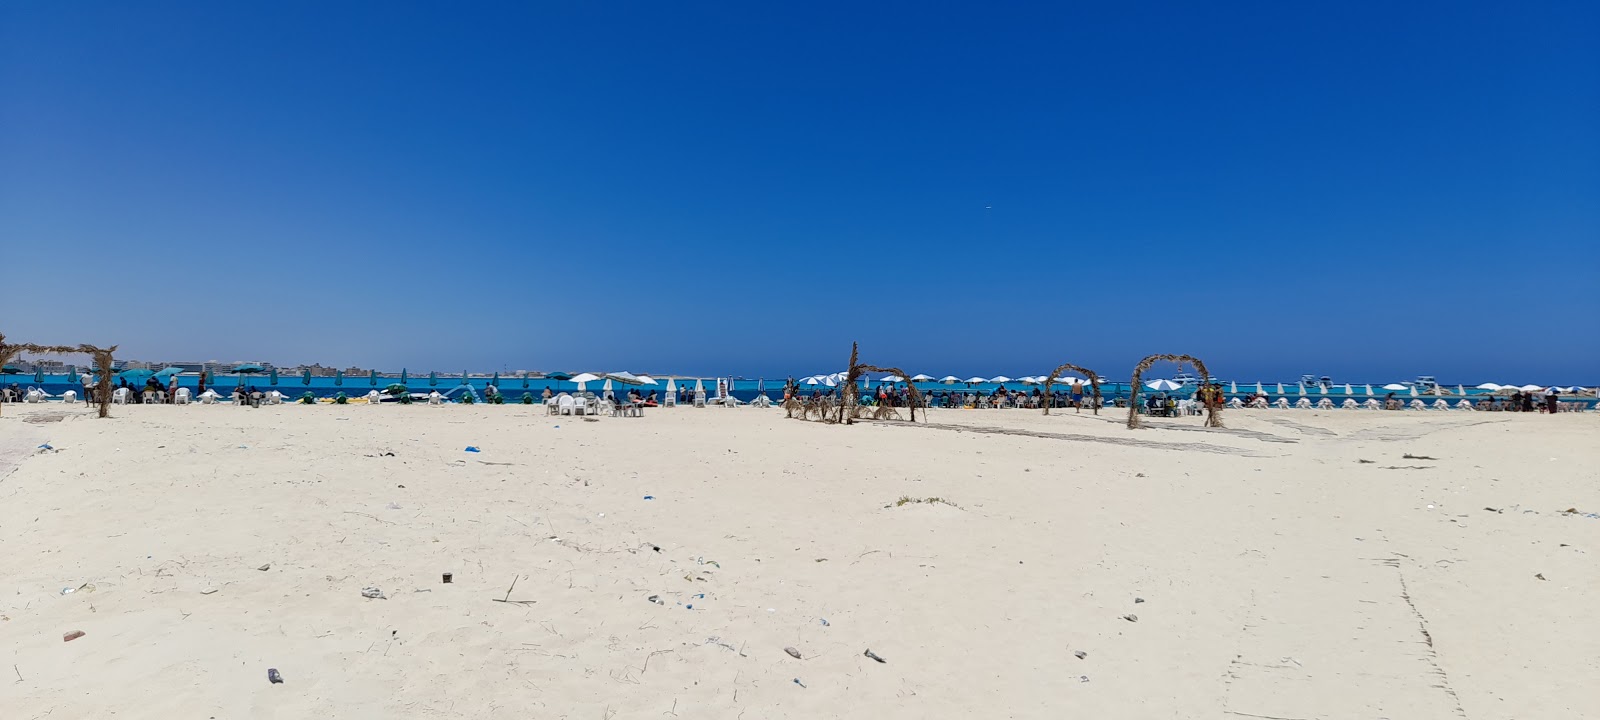 Photo of Al Mubarak Beach and the settlement